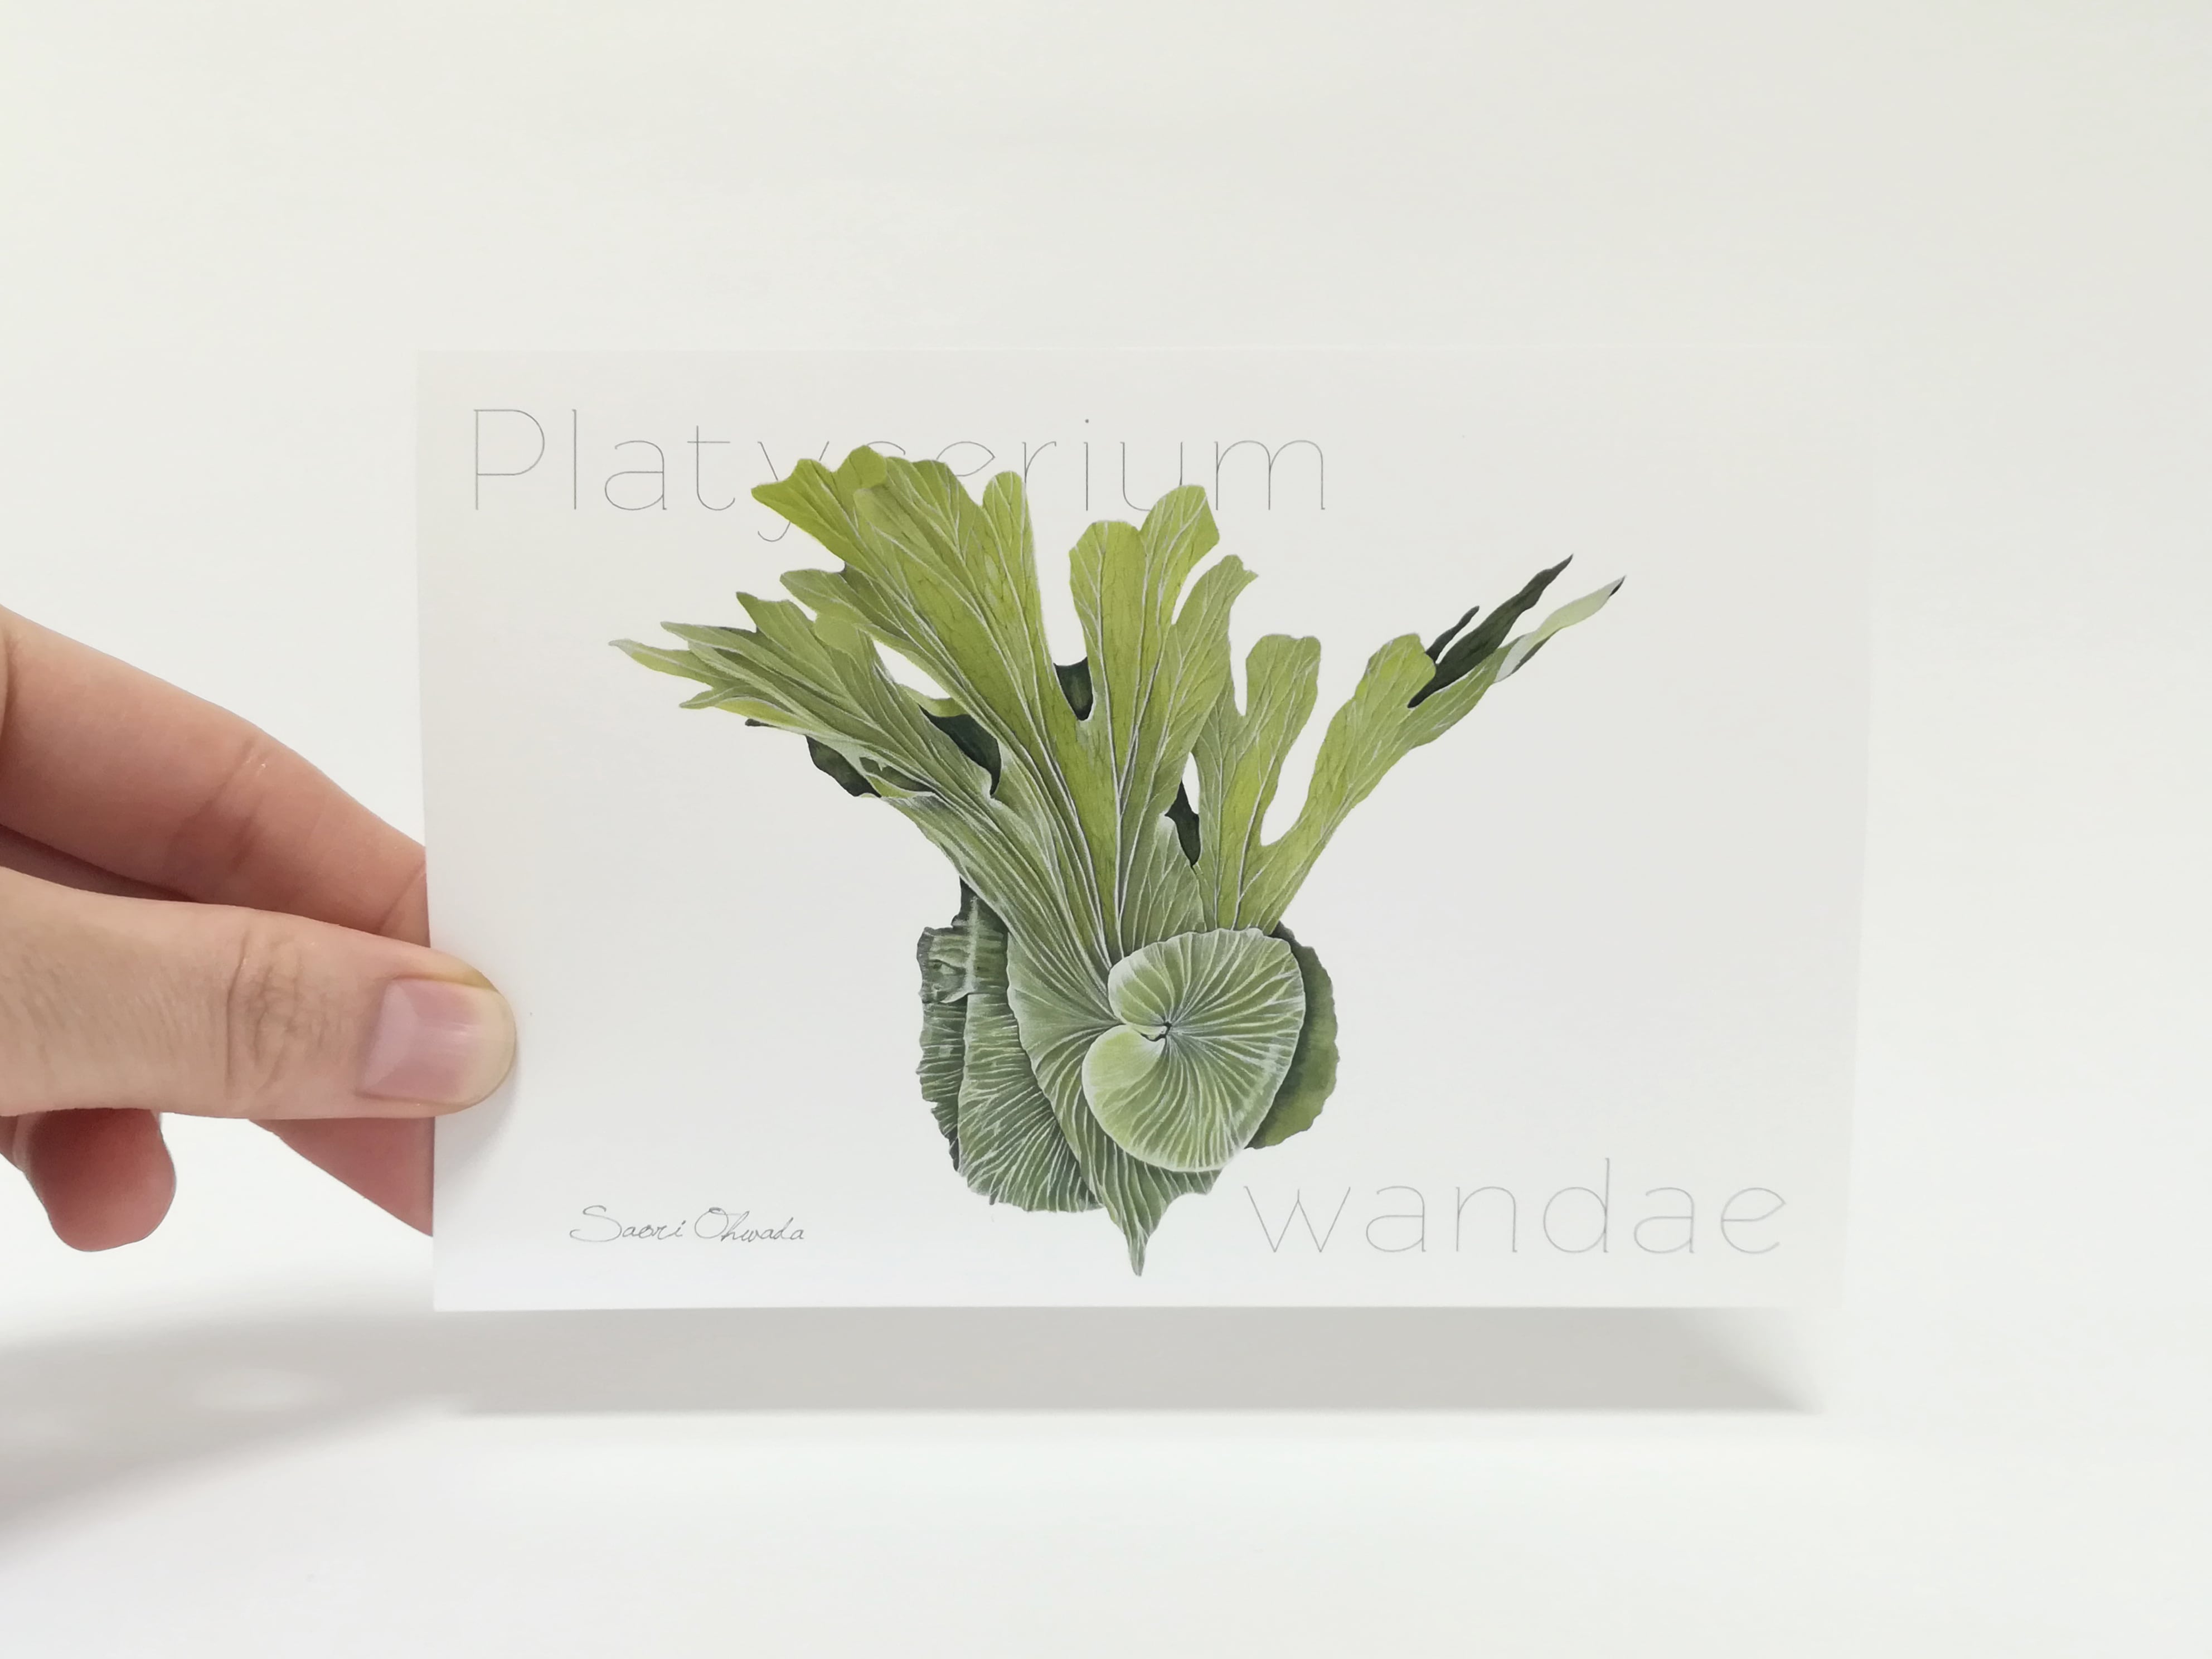 Platycerium Wandae ポストカード